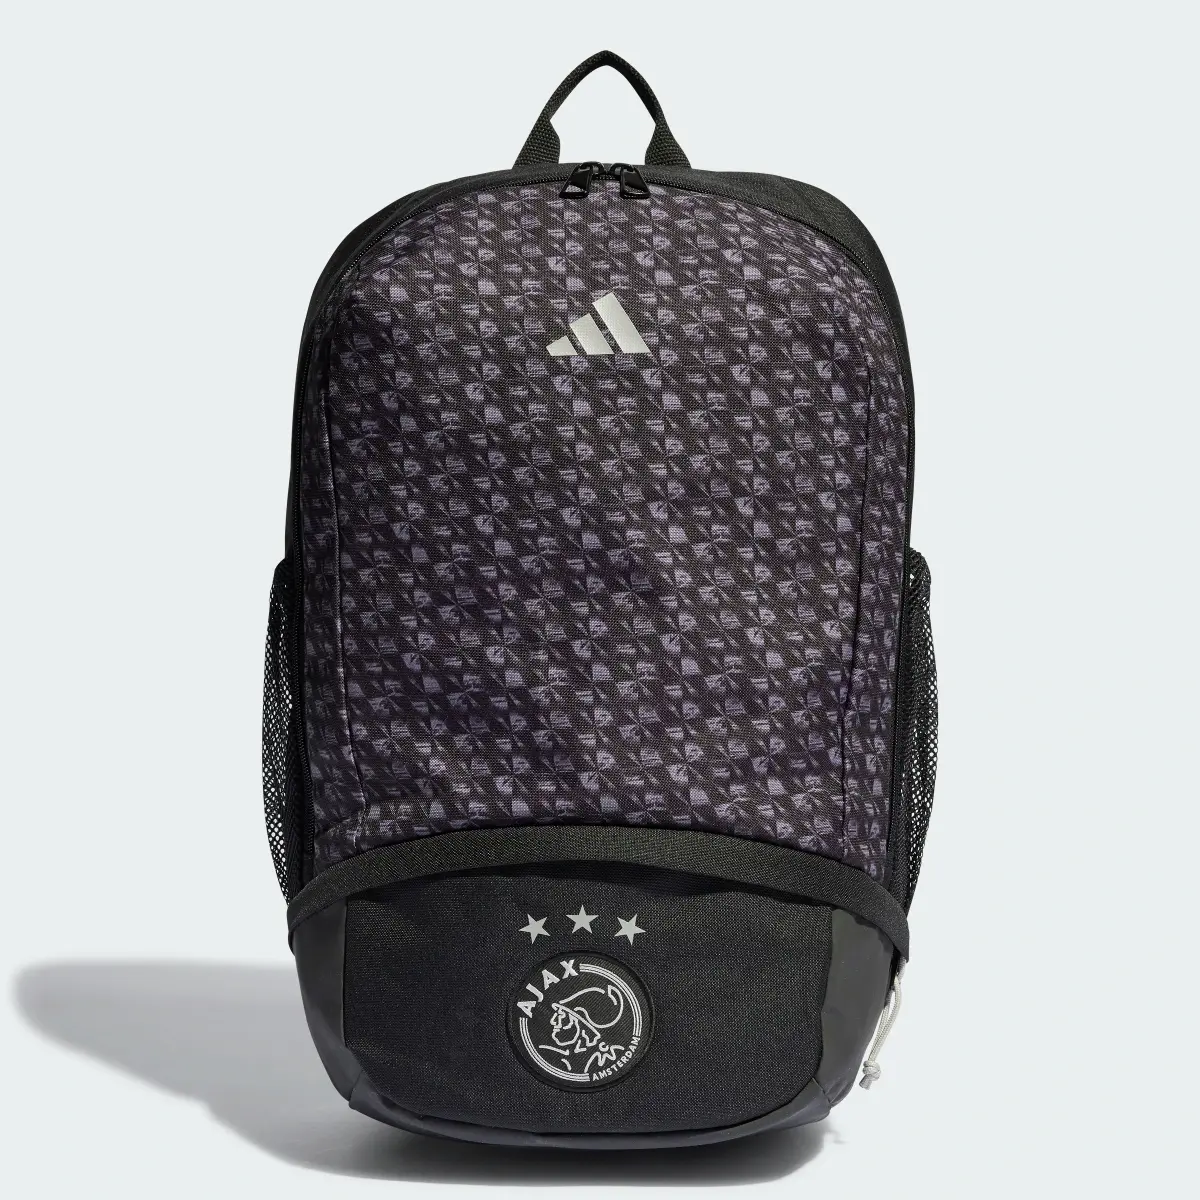 Adidas Ajax Amsterdam Backpack. 2